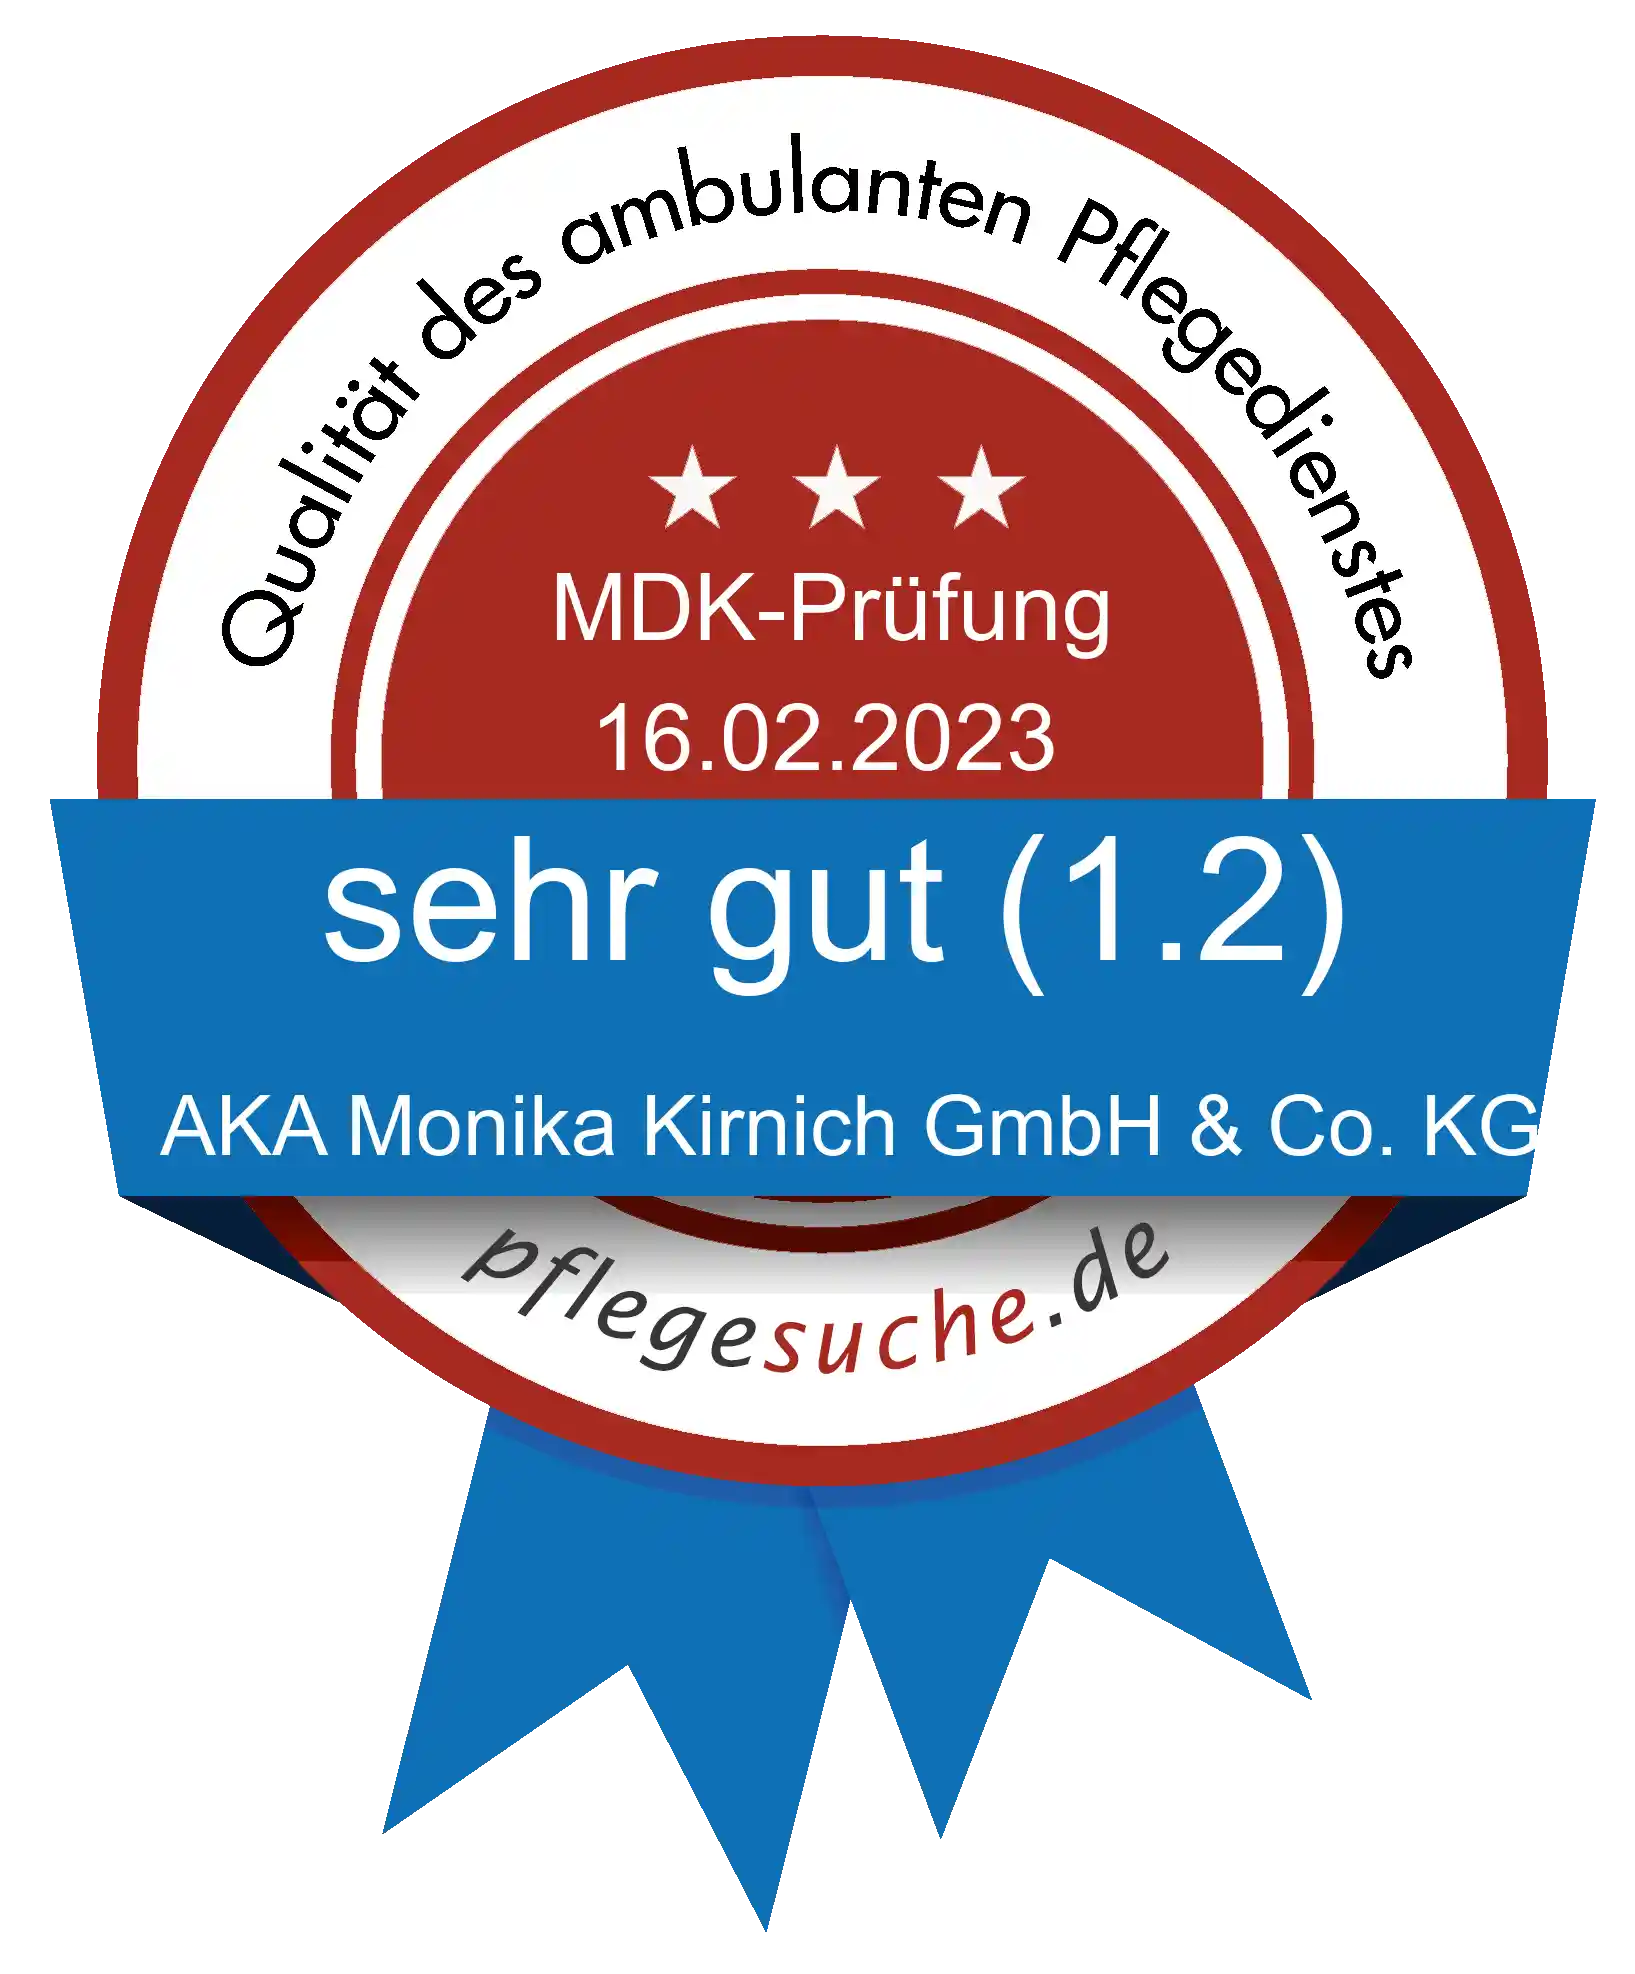 Siegel Benotung: AKA Monika Kirnich GmbH & Co. KG